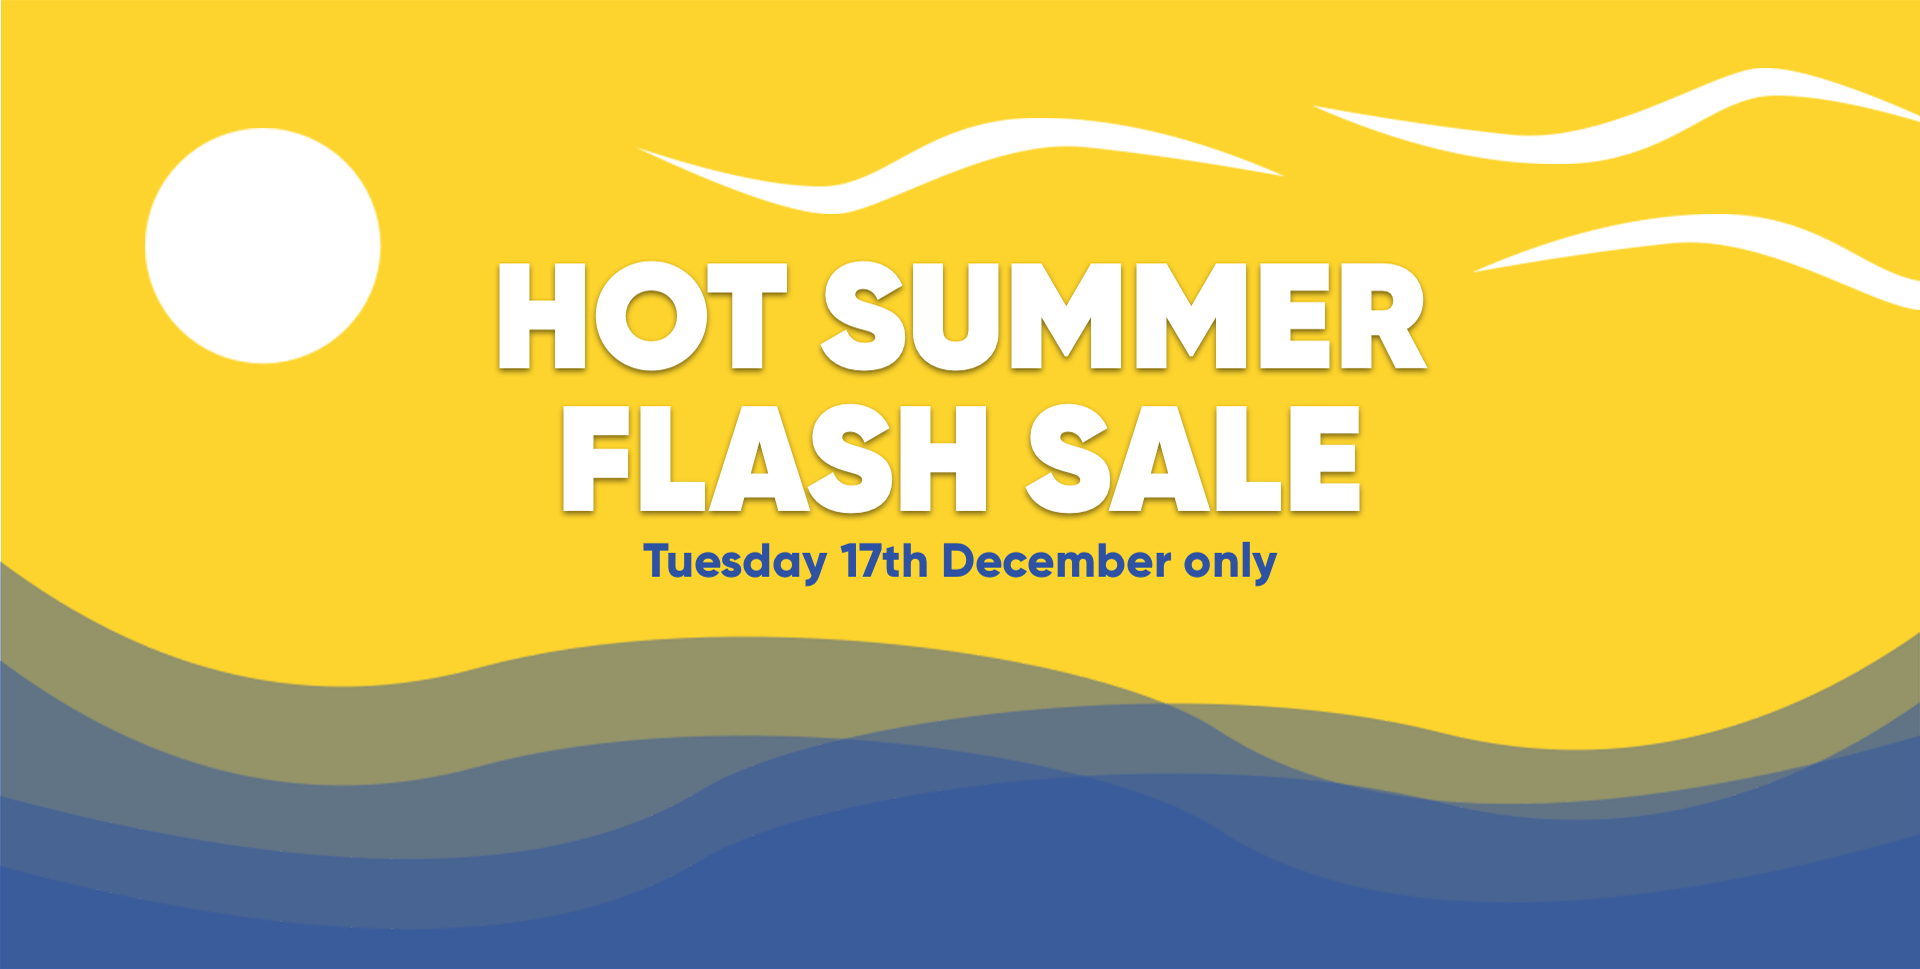 Hot summer flash sale